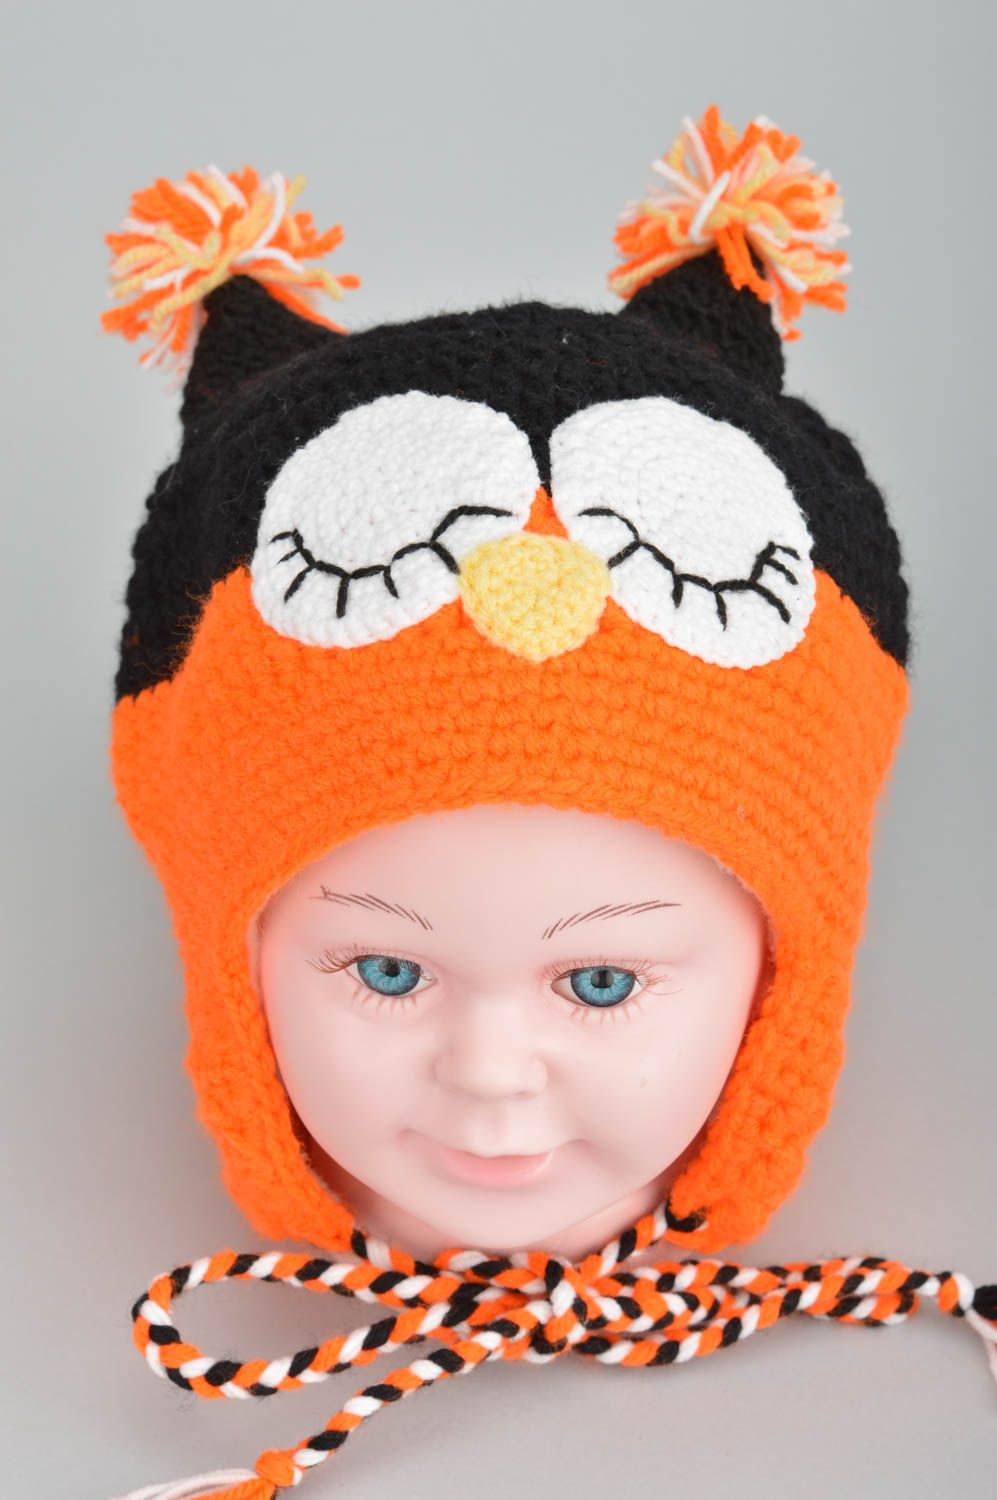 Handmade cute crocheted cap in shape of sleeping owl accessory for kids photo 2